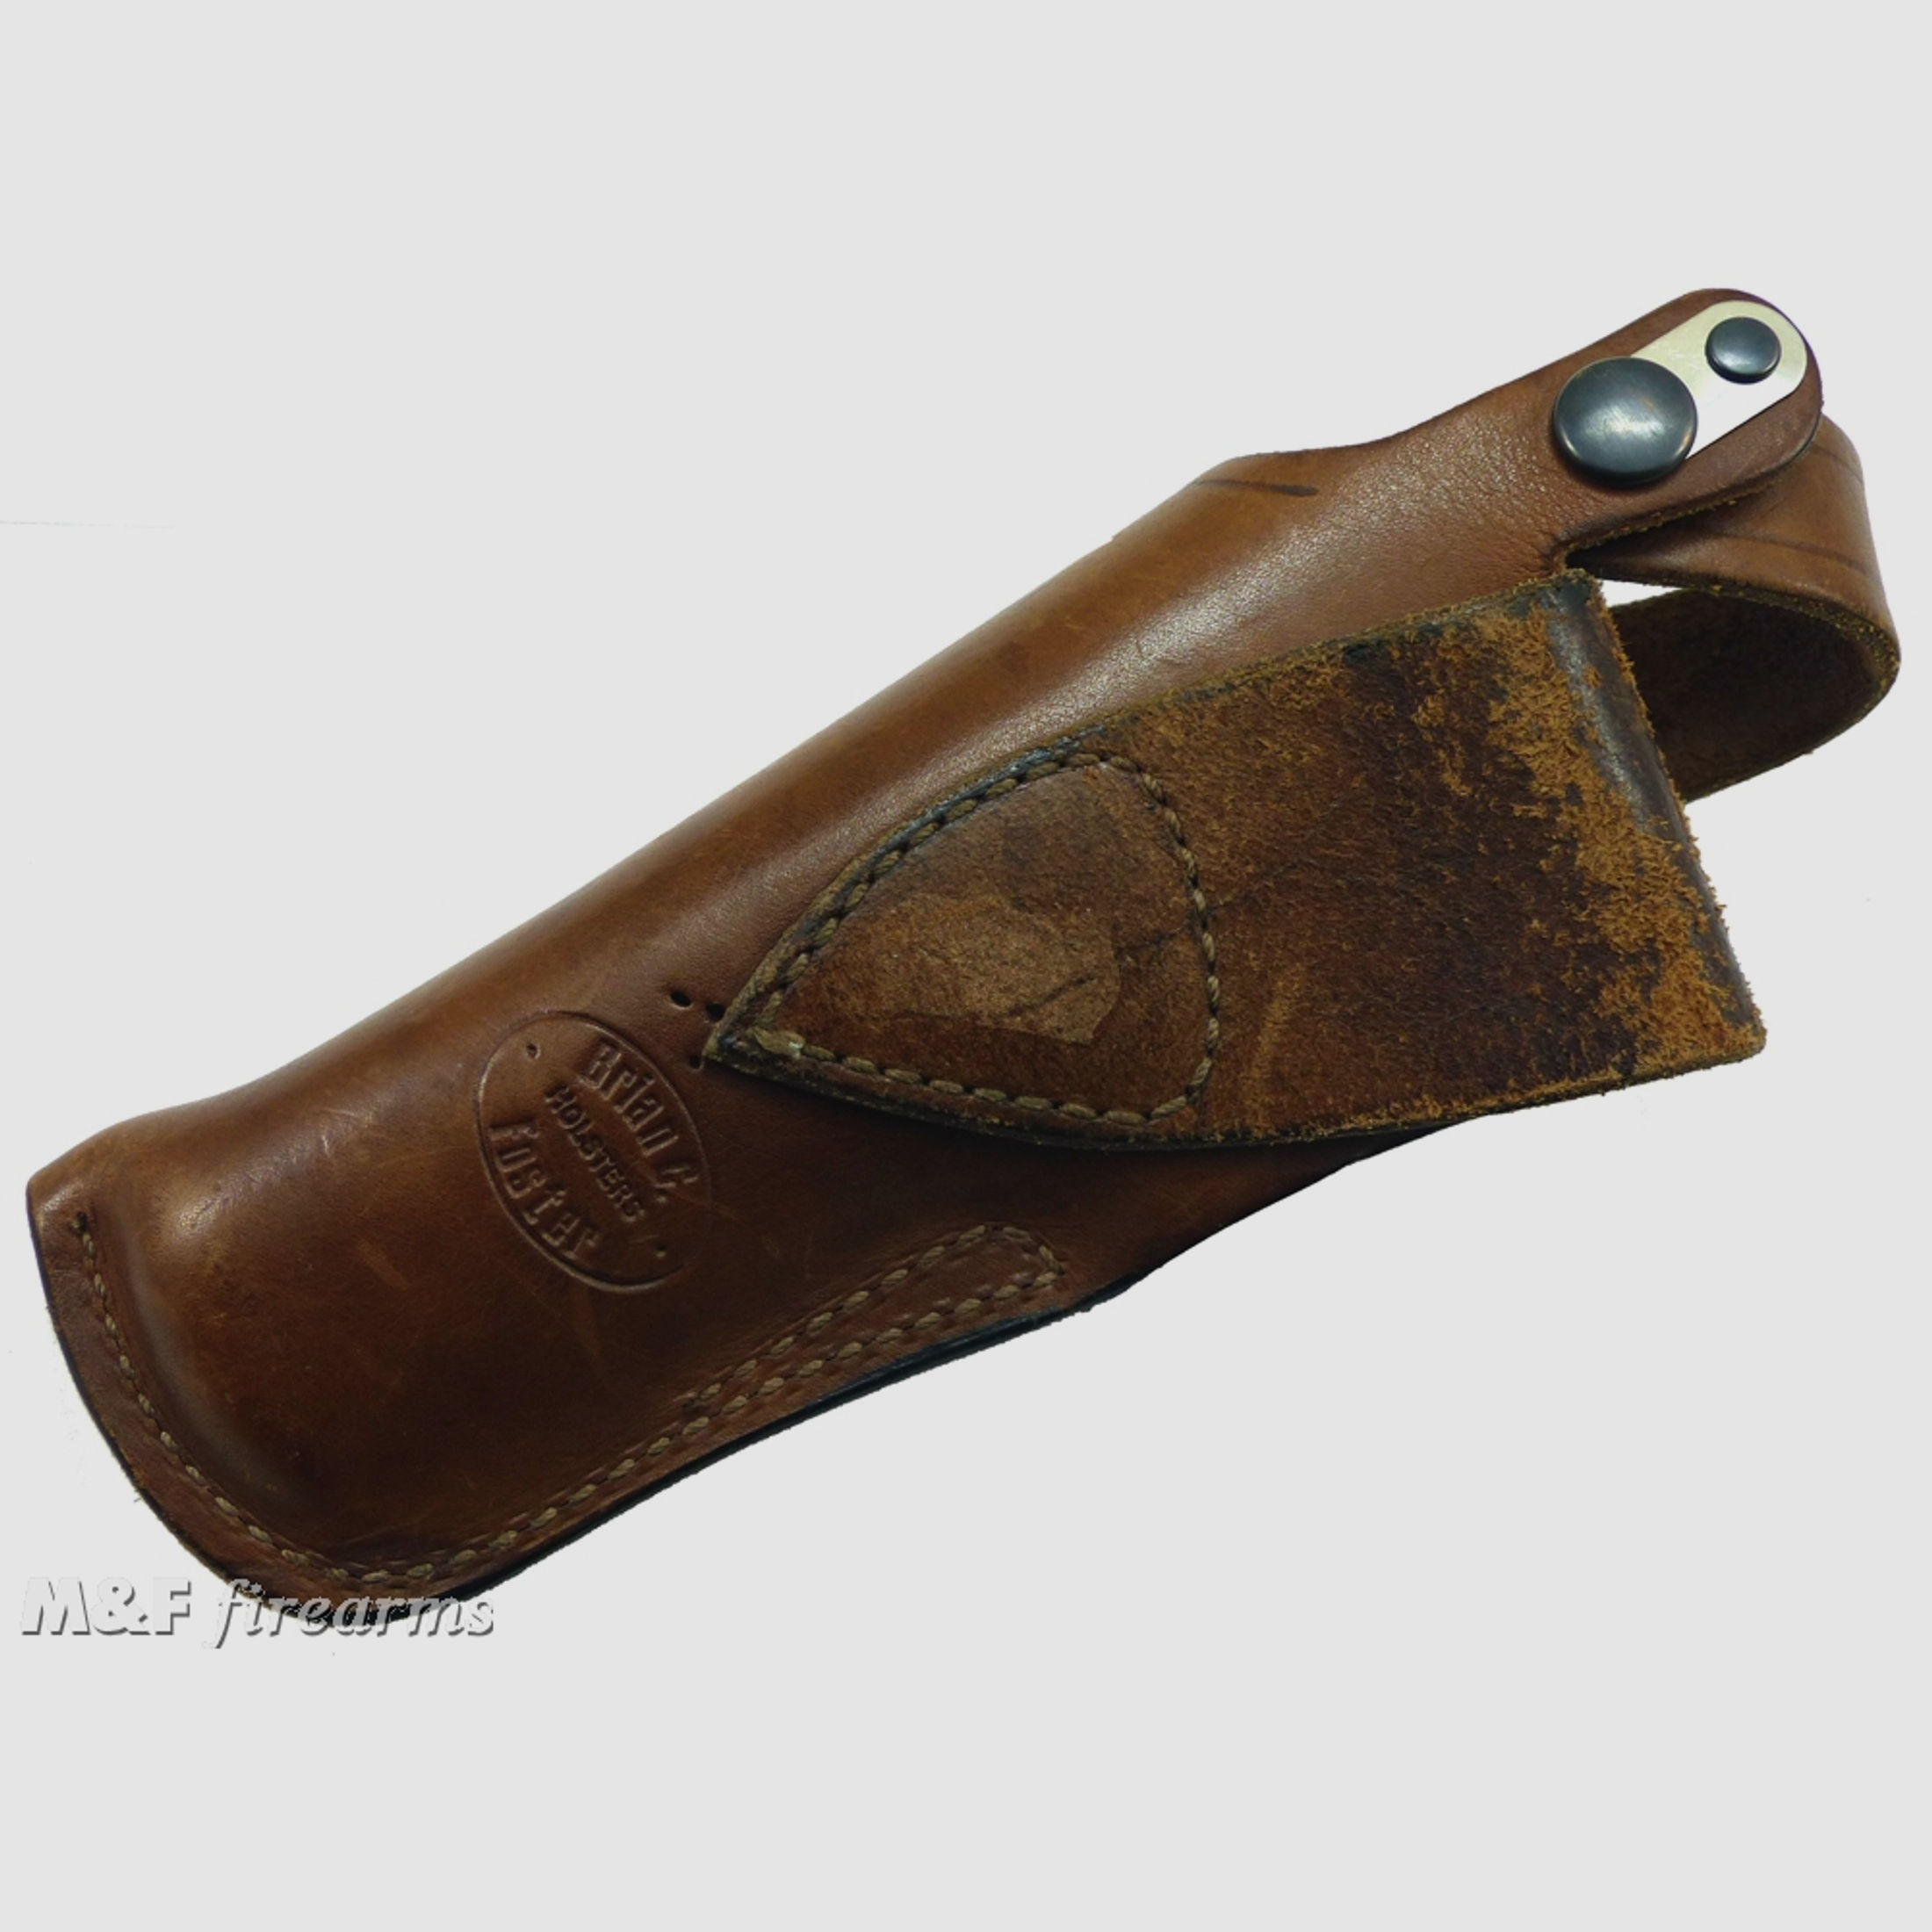 Ziviles Pistolen-Holster (Gürtelholster) für Colt 1911 Government 3,5 mm Natur-Rindleder punziert